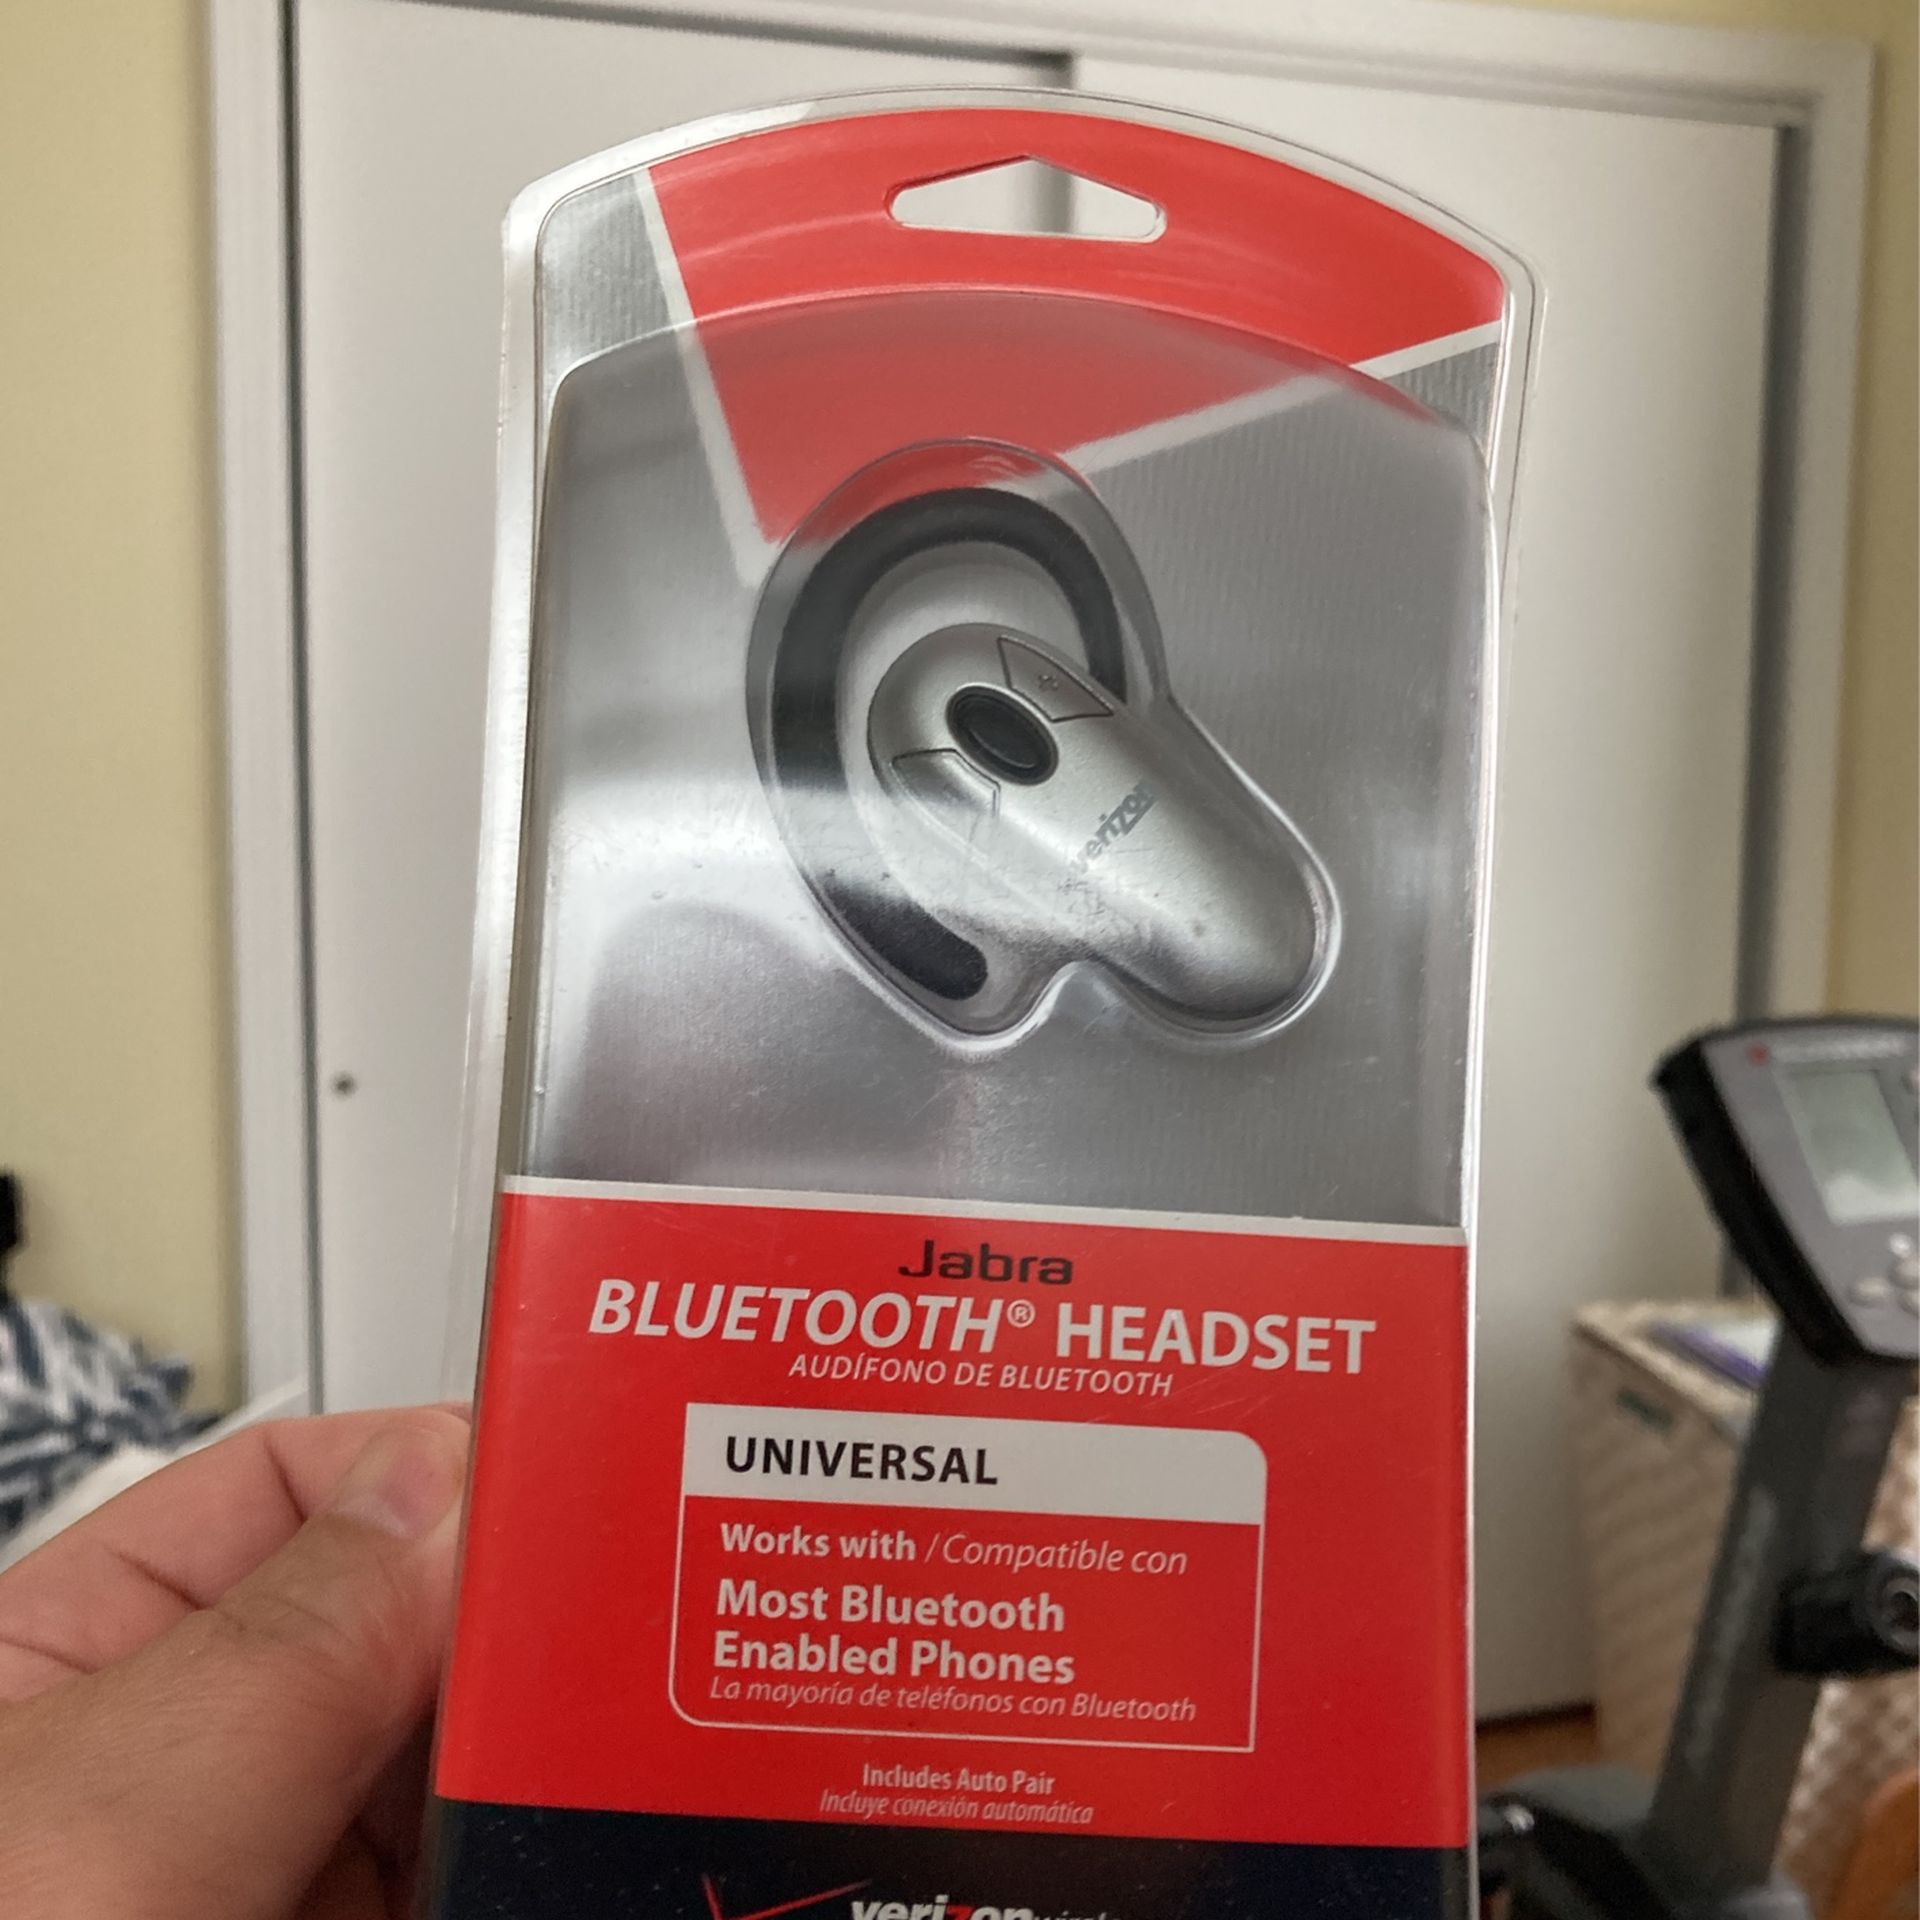 Bluetooth headset universal